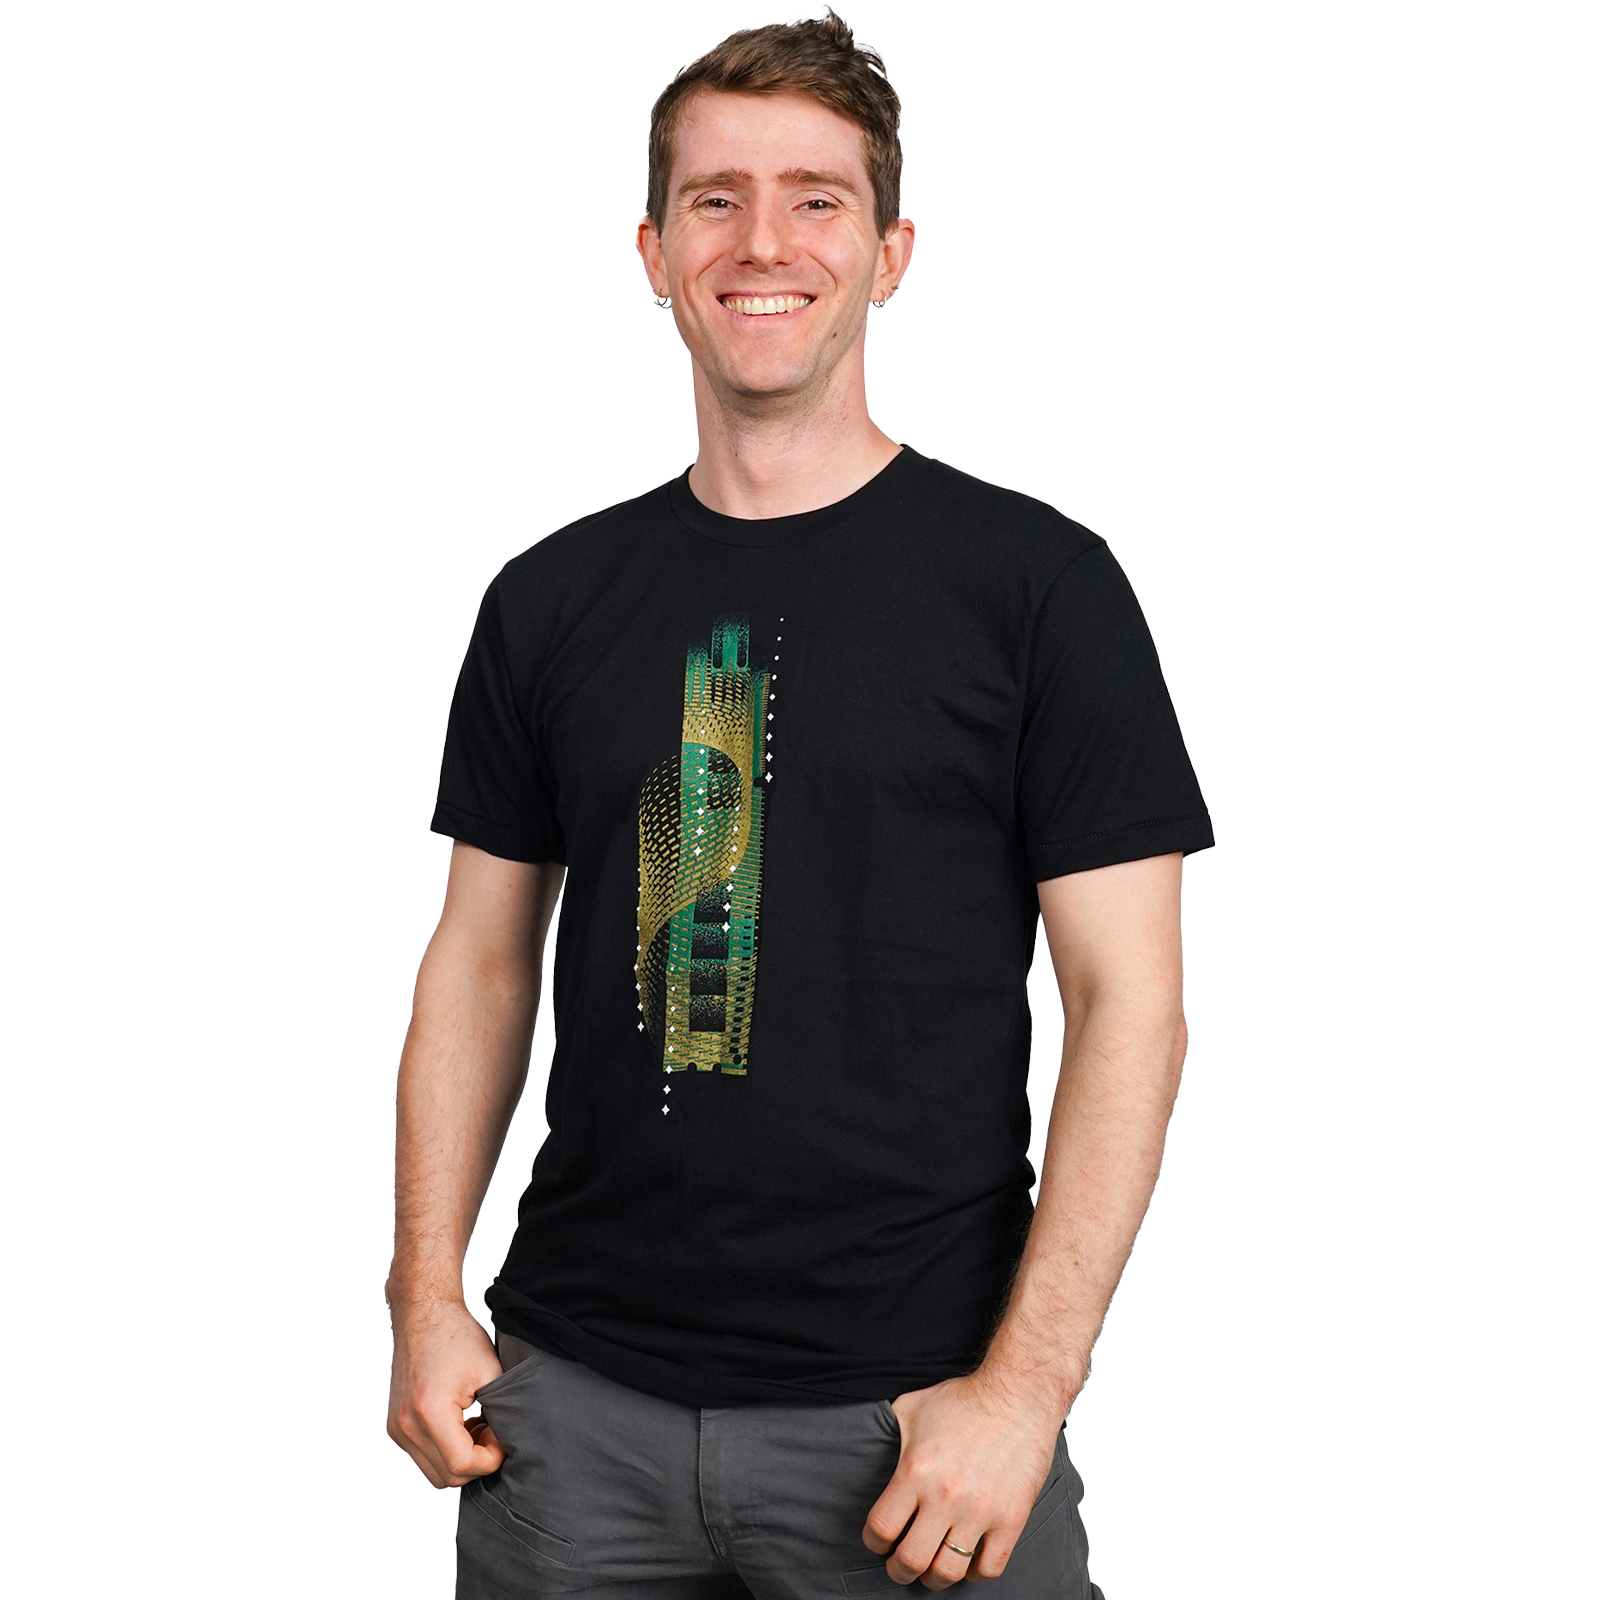 Model: Linus, Size: Medium, Height: 5’6”/168cm